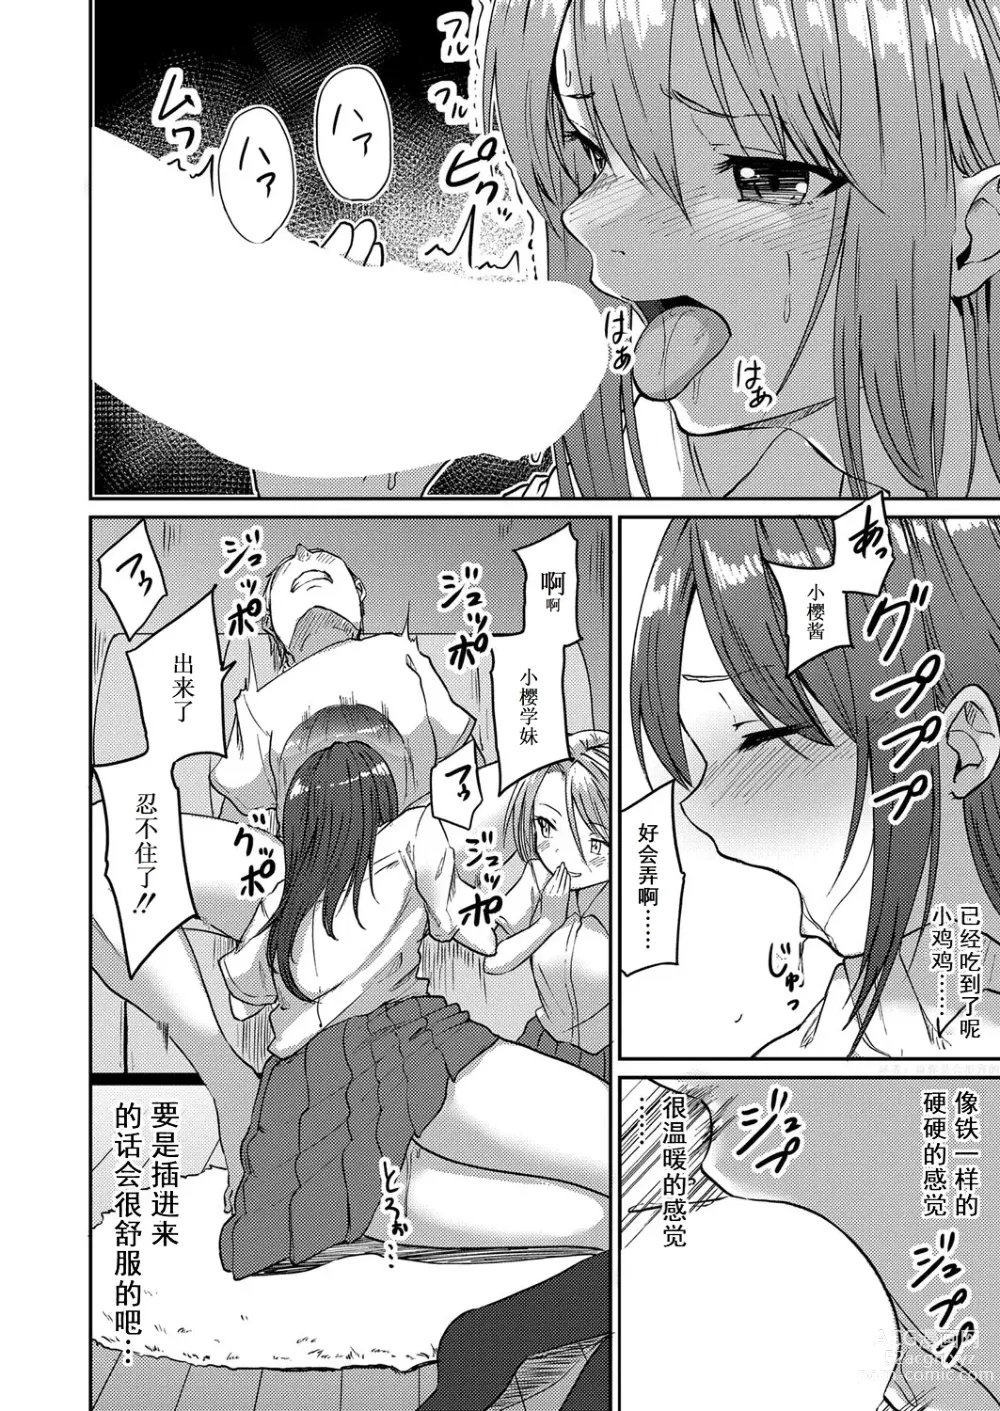 Page 14 of manga IREKAWARI